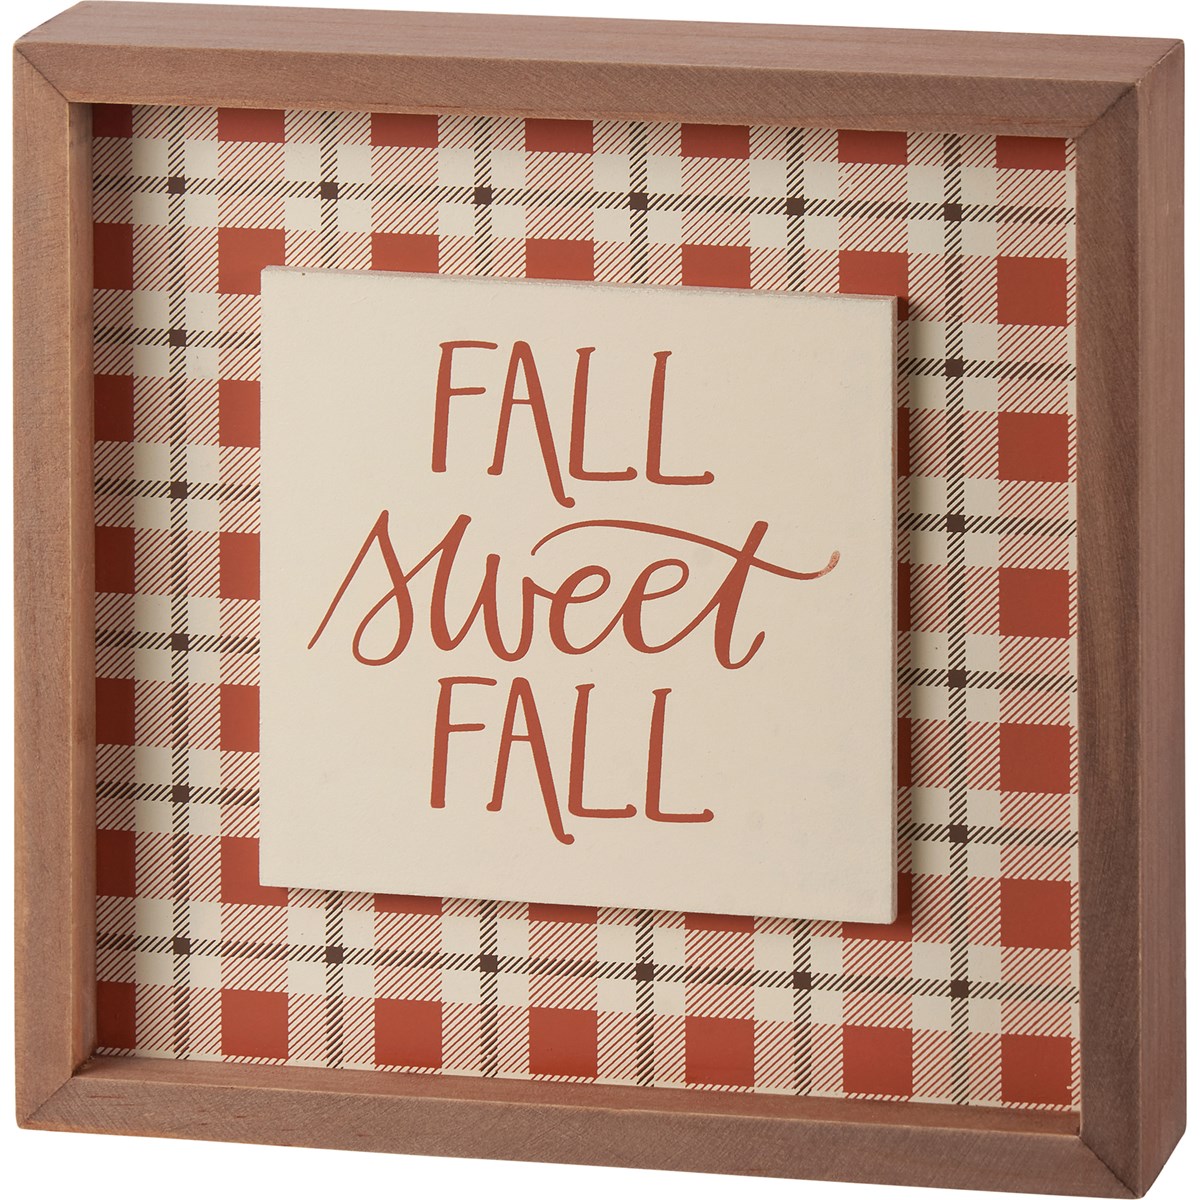 Fall Sweet Fall Plaid Inset Box Sign - Wood